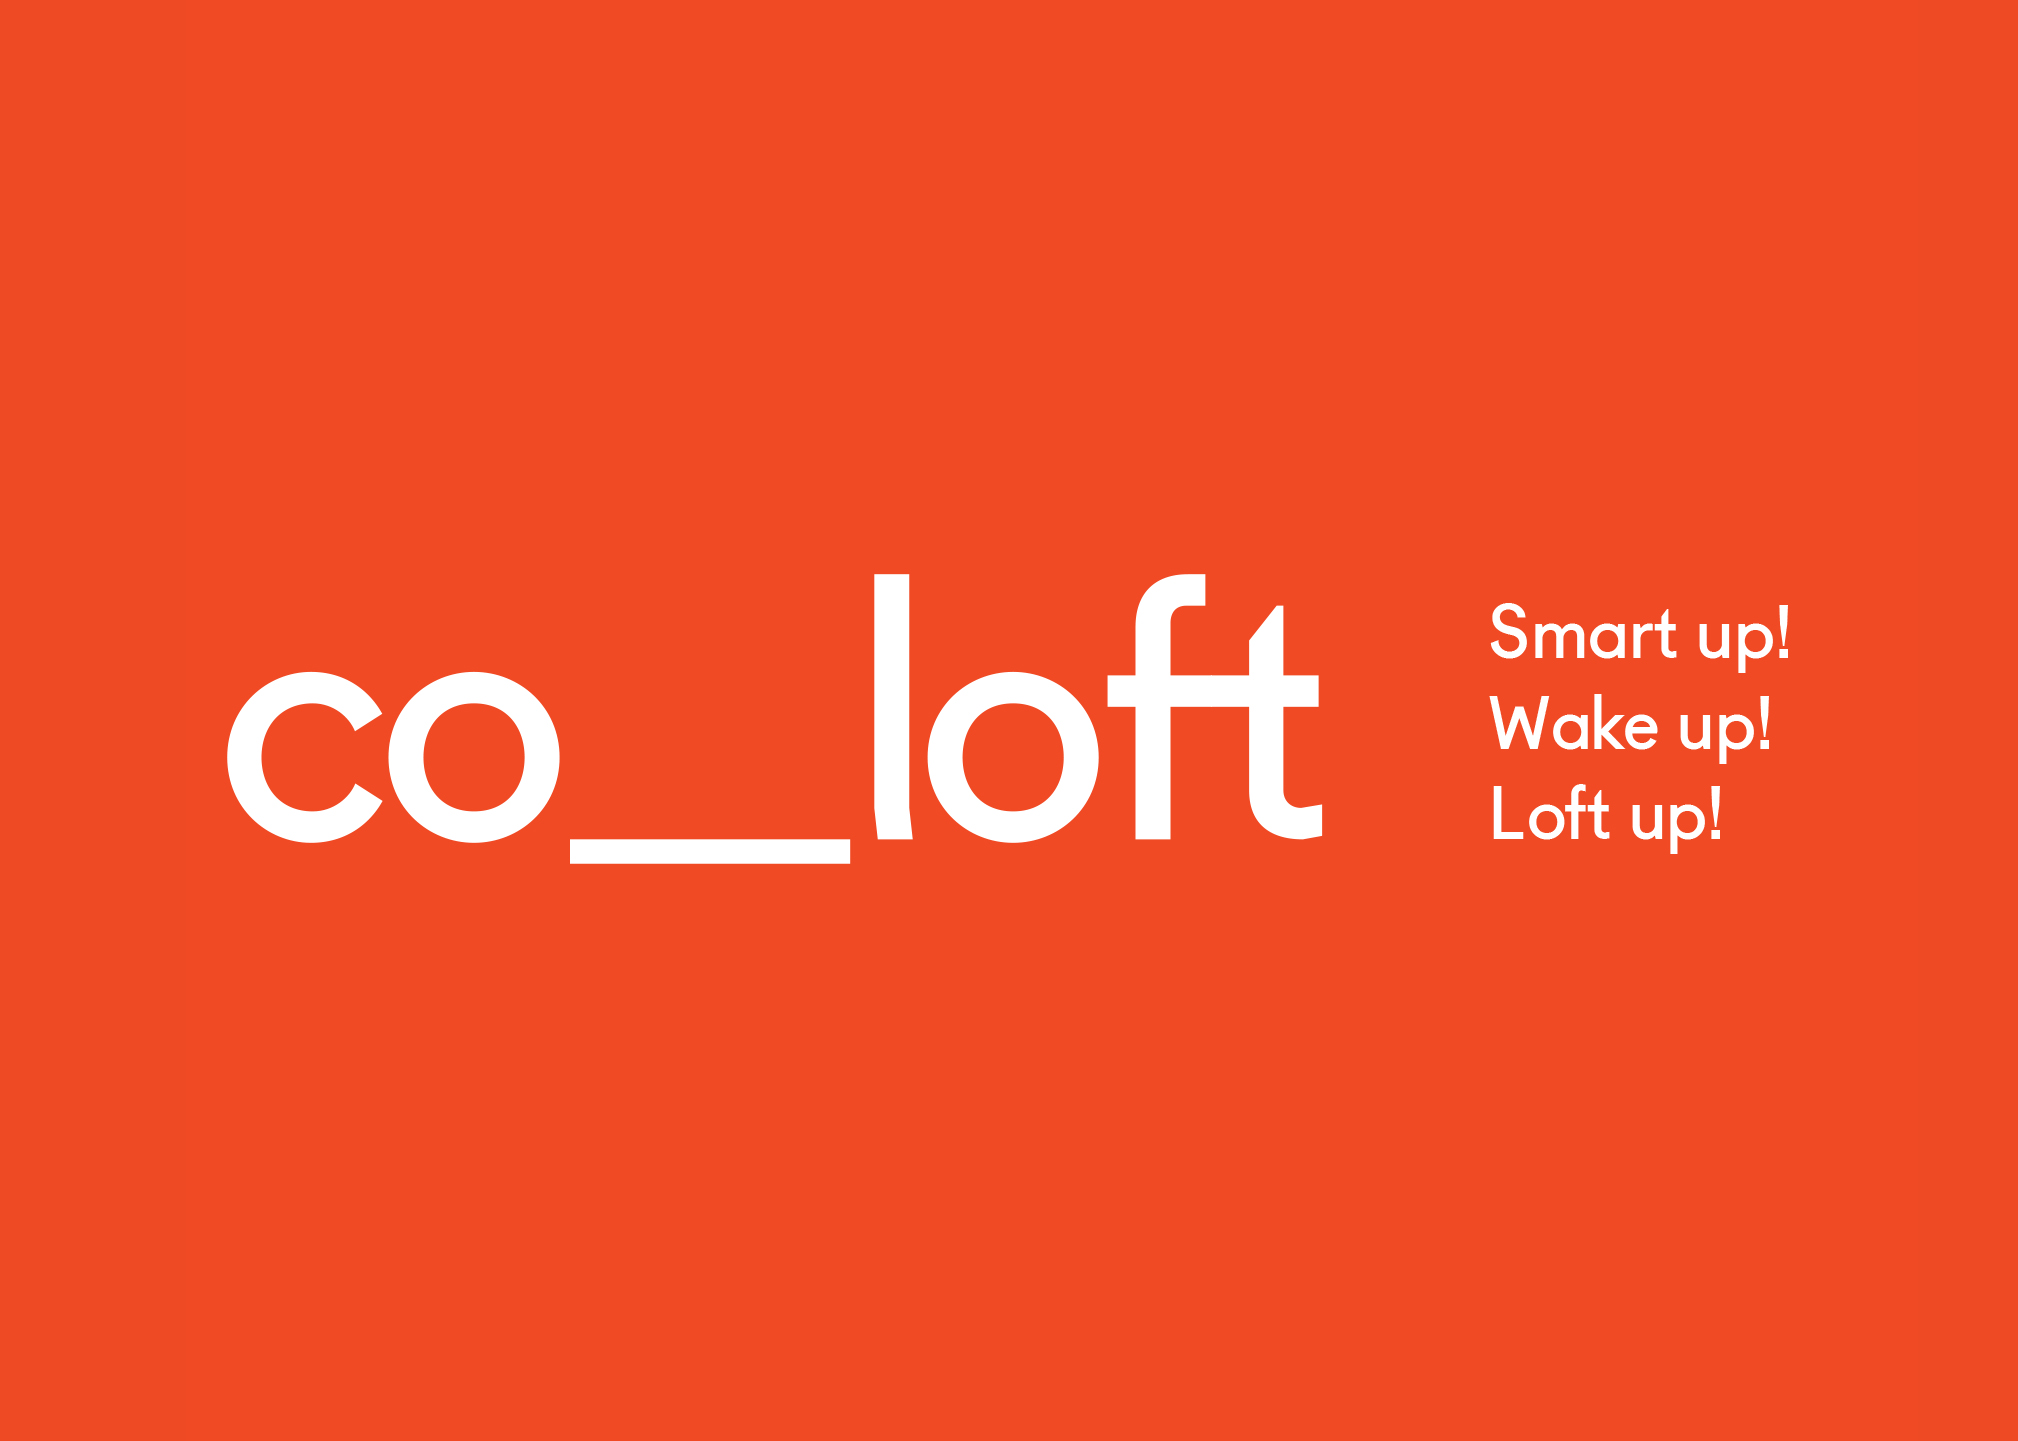 Co_loft. Smart up! Wake up! Loft up!